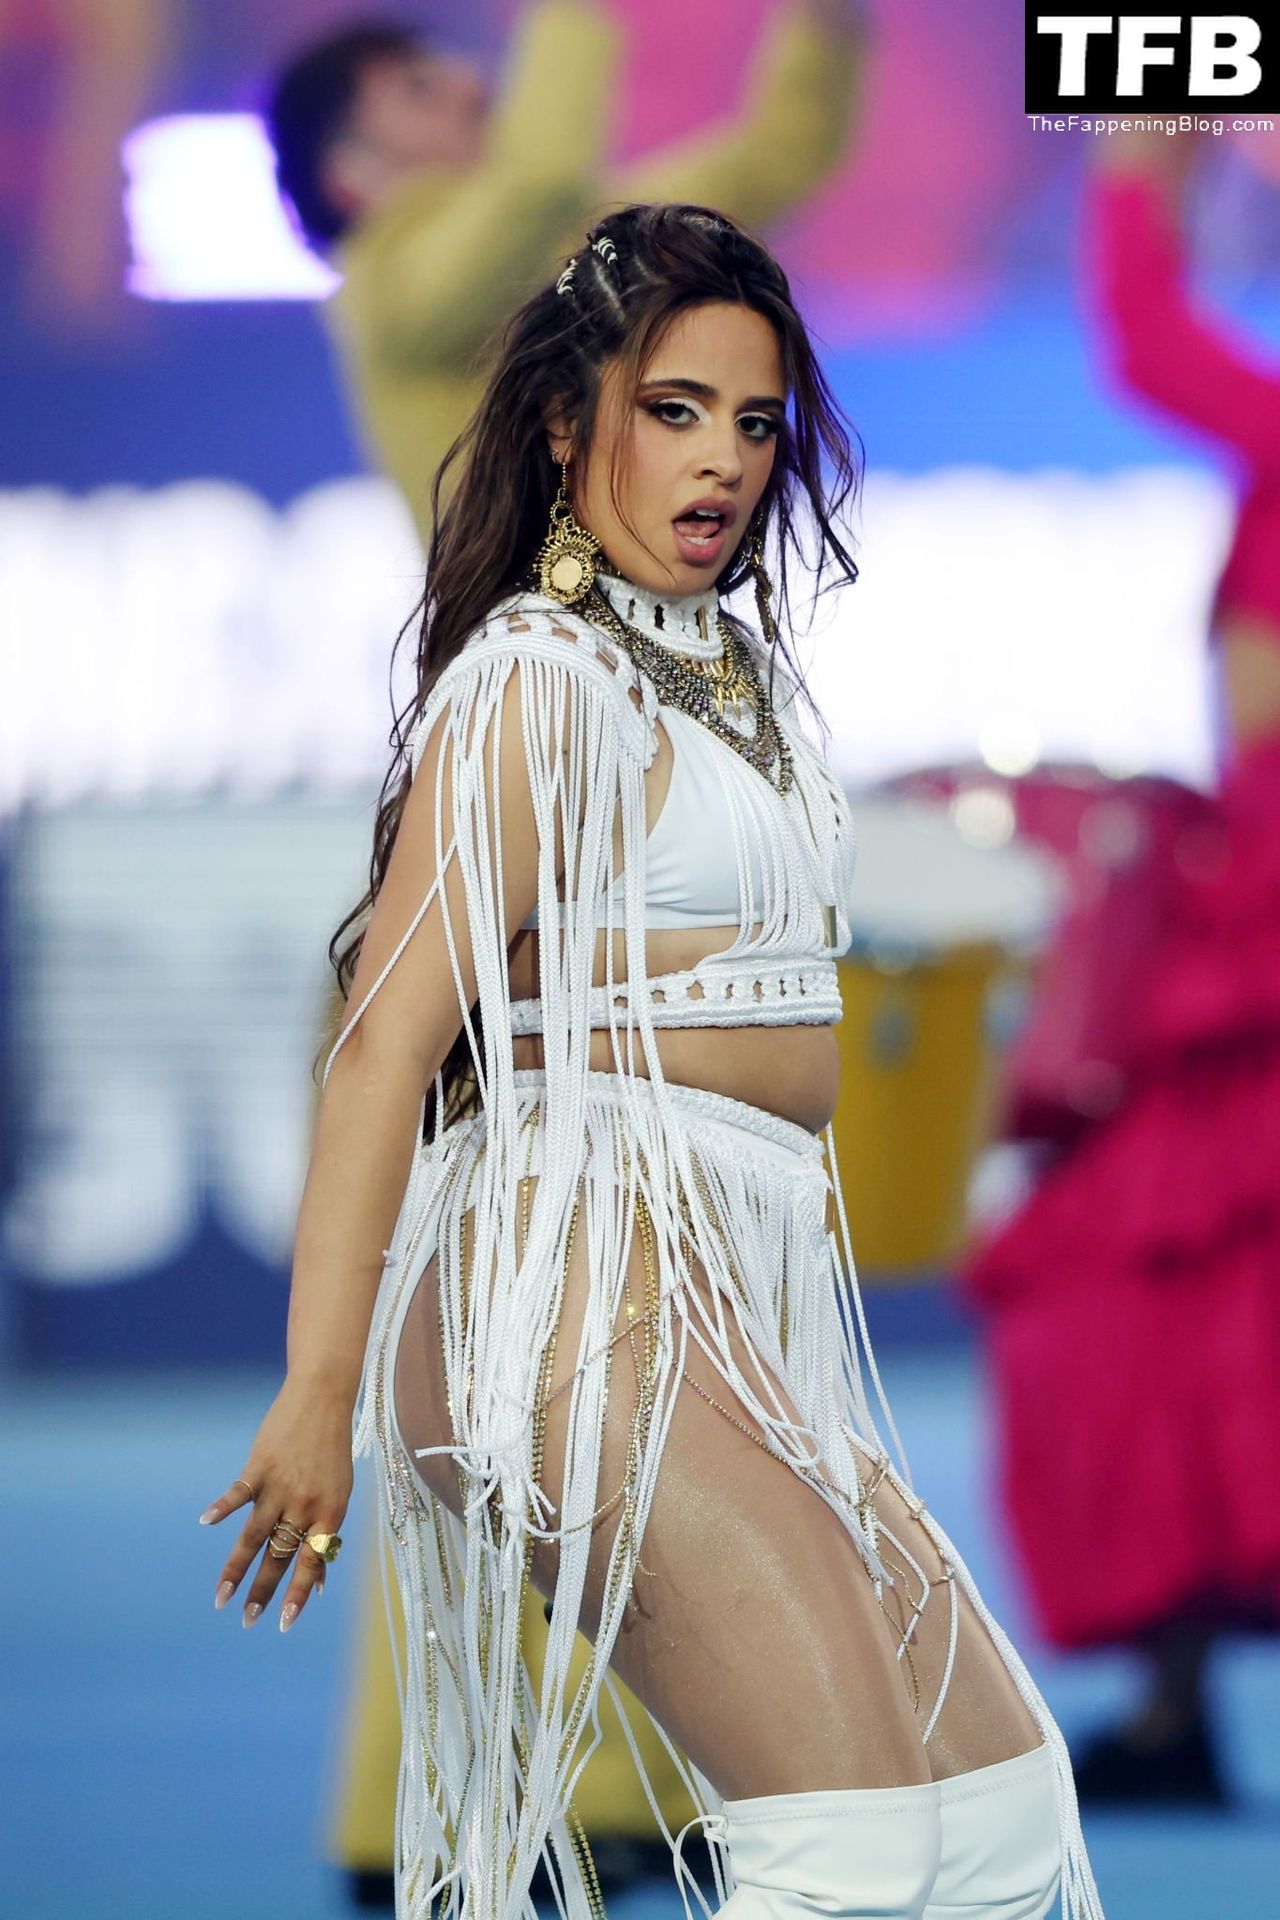 Camila-Cabello-Sexy-The-Fappening-Blog-24-1.jpg